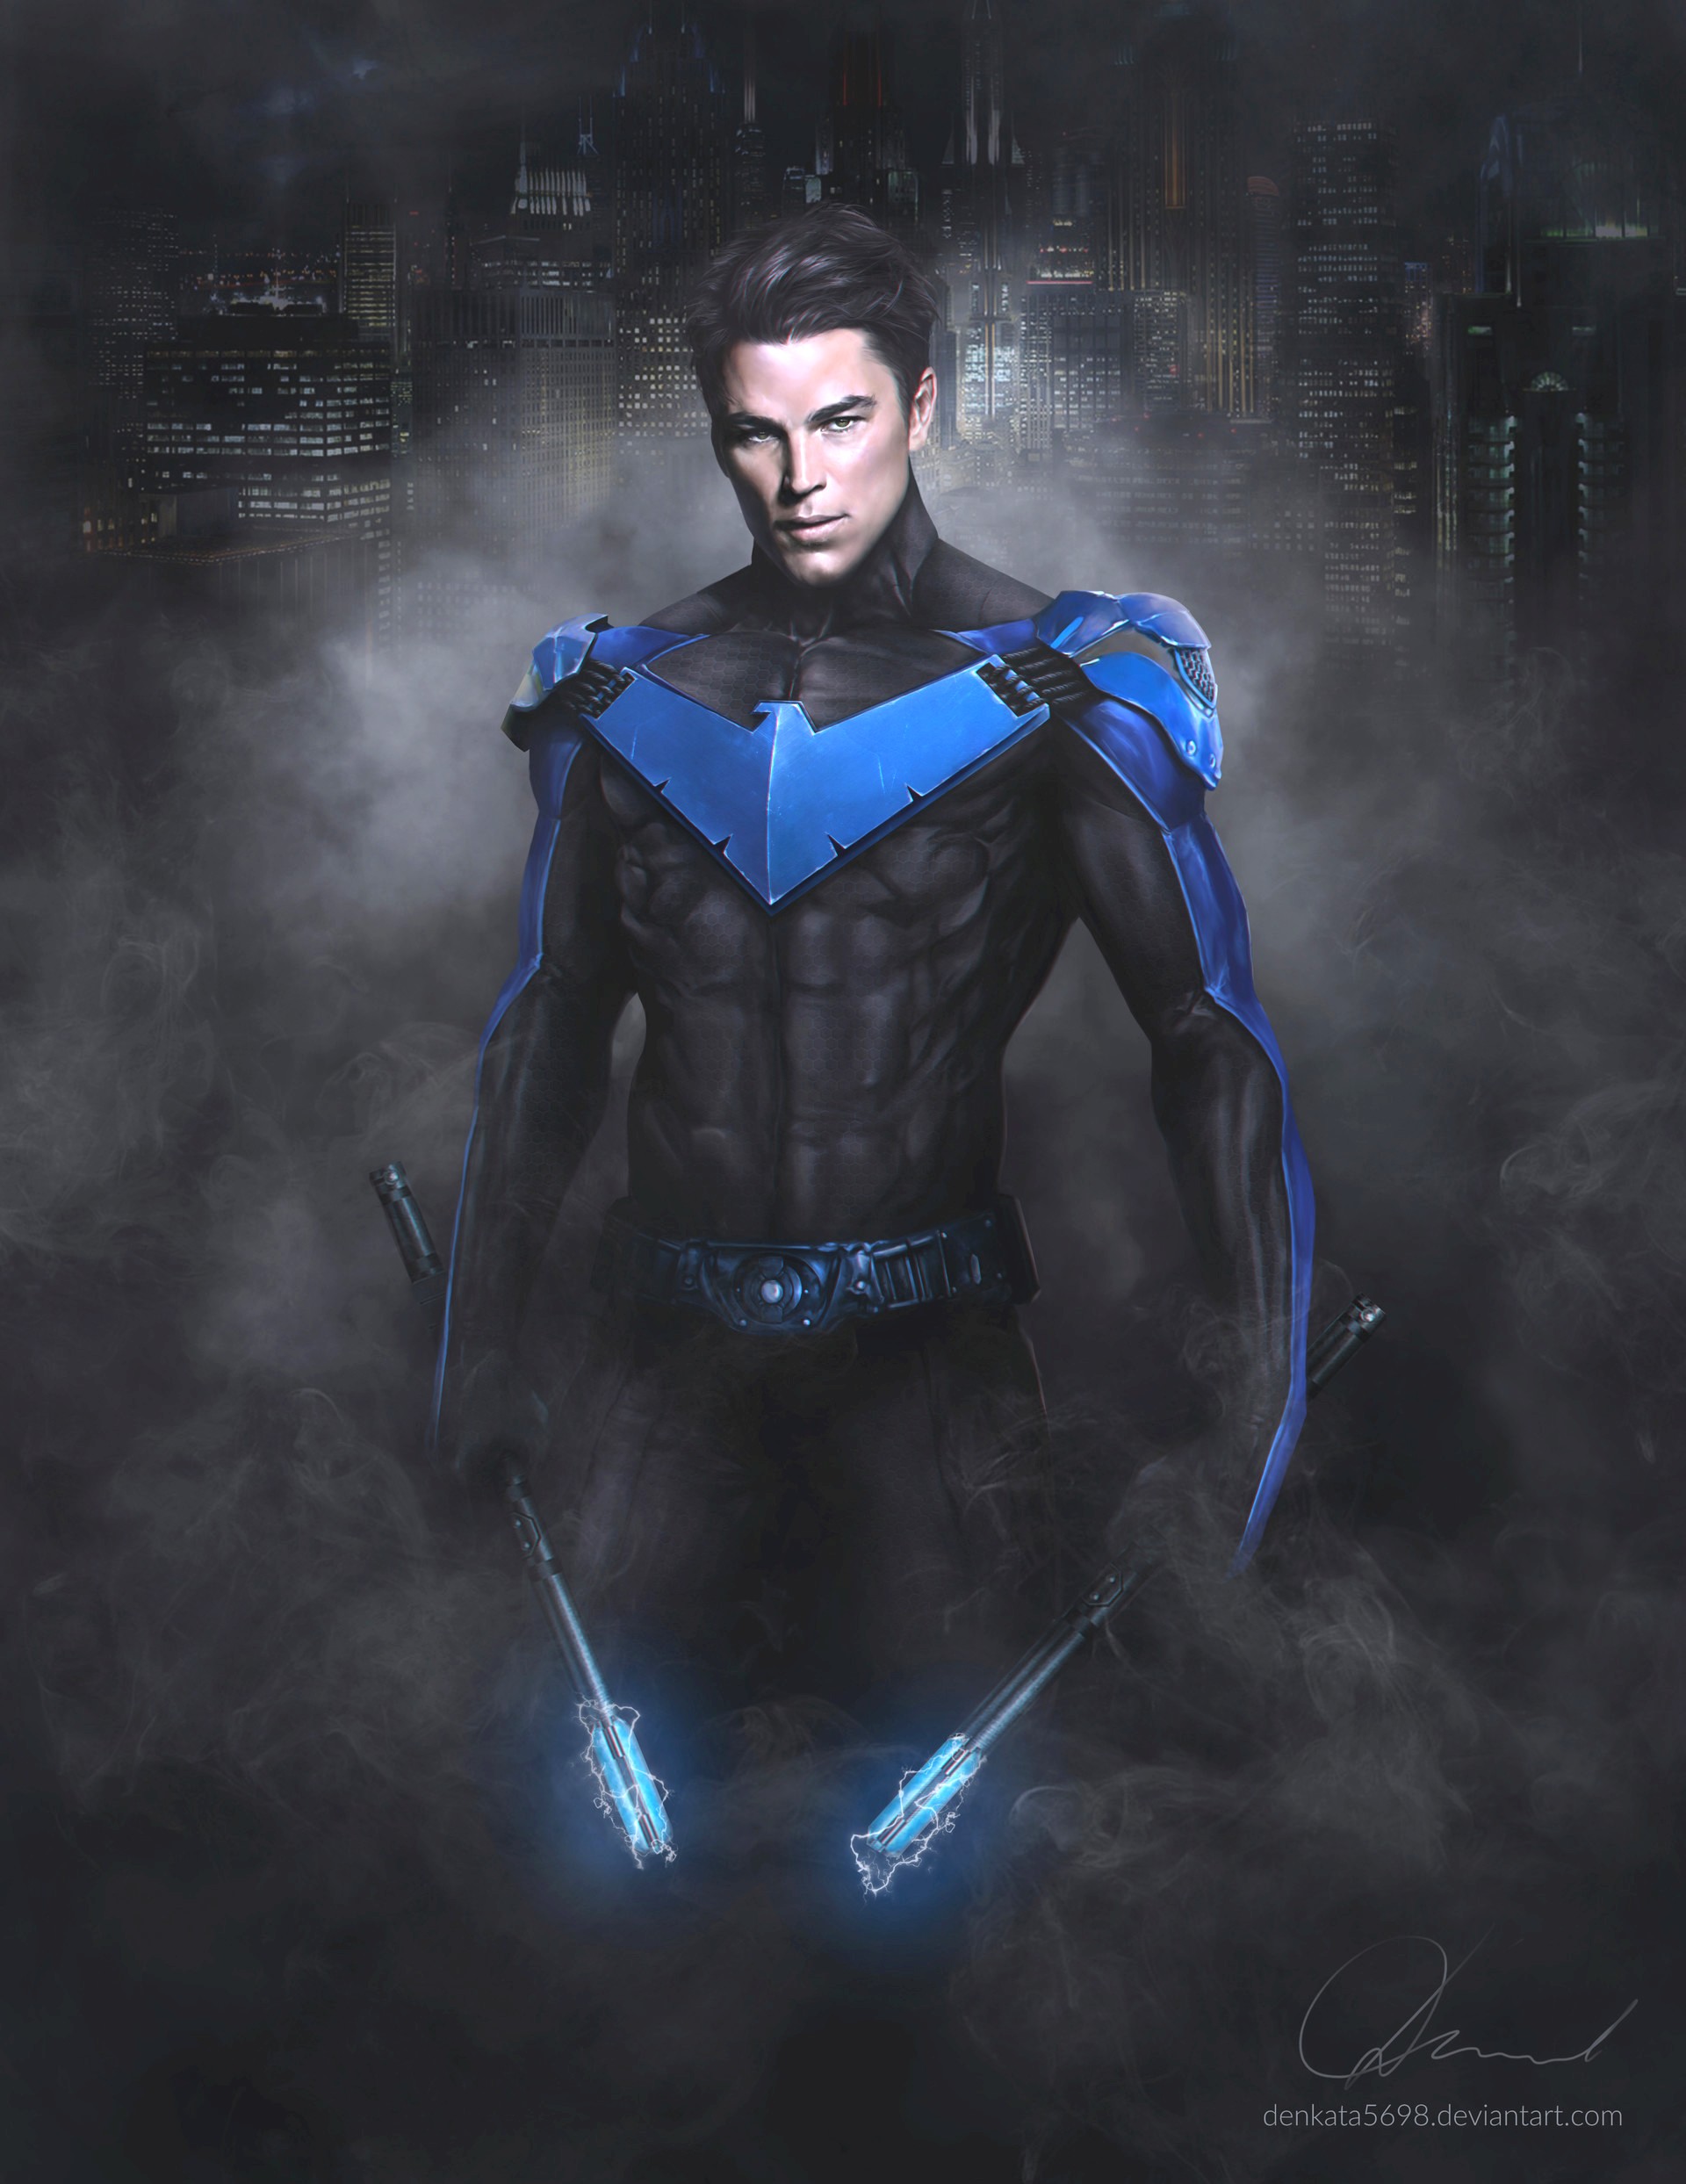 Josh Hartnett as Nightwing